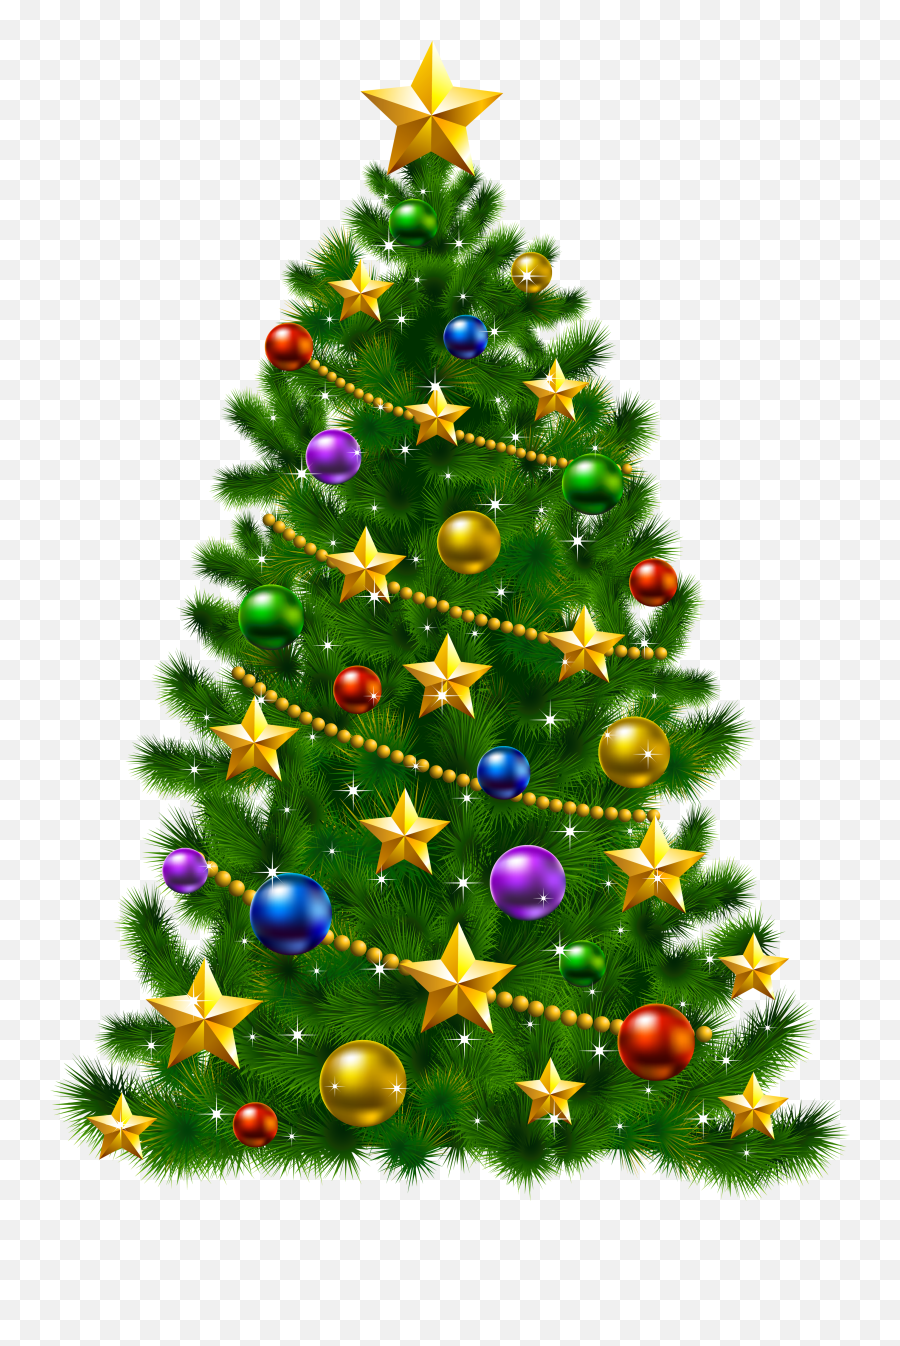 Whatu0027s On In November The Monday Night Club - Clipart Christmas Tree Transparent Background Emoji,Christmas Tree Emoticon